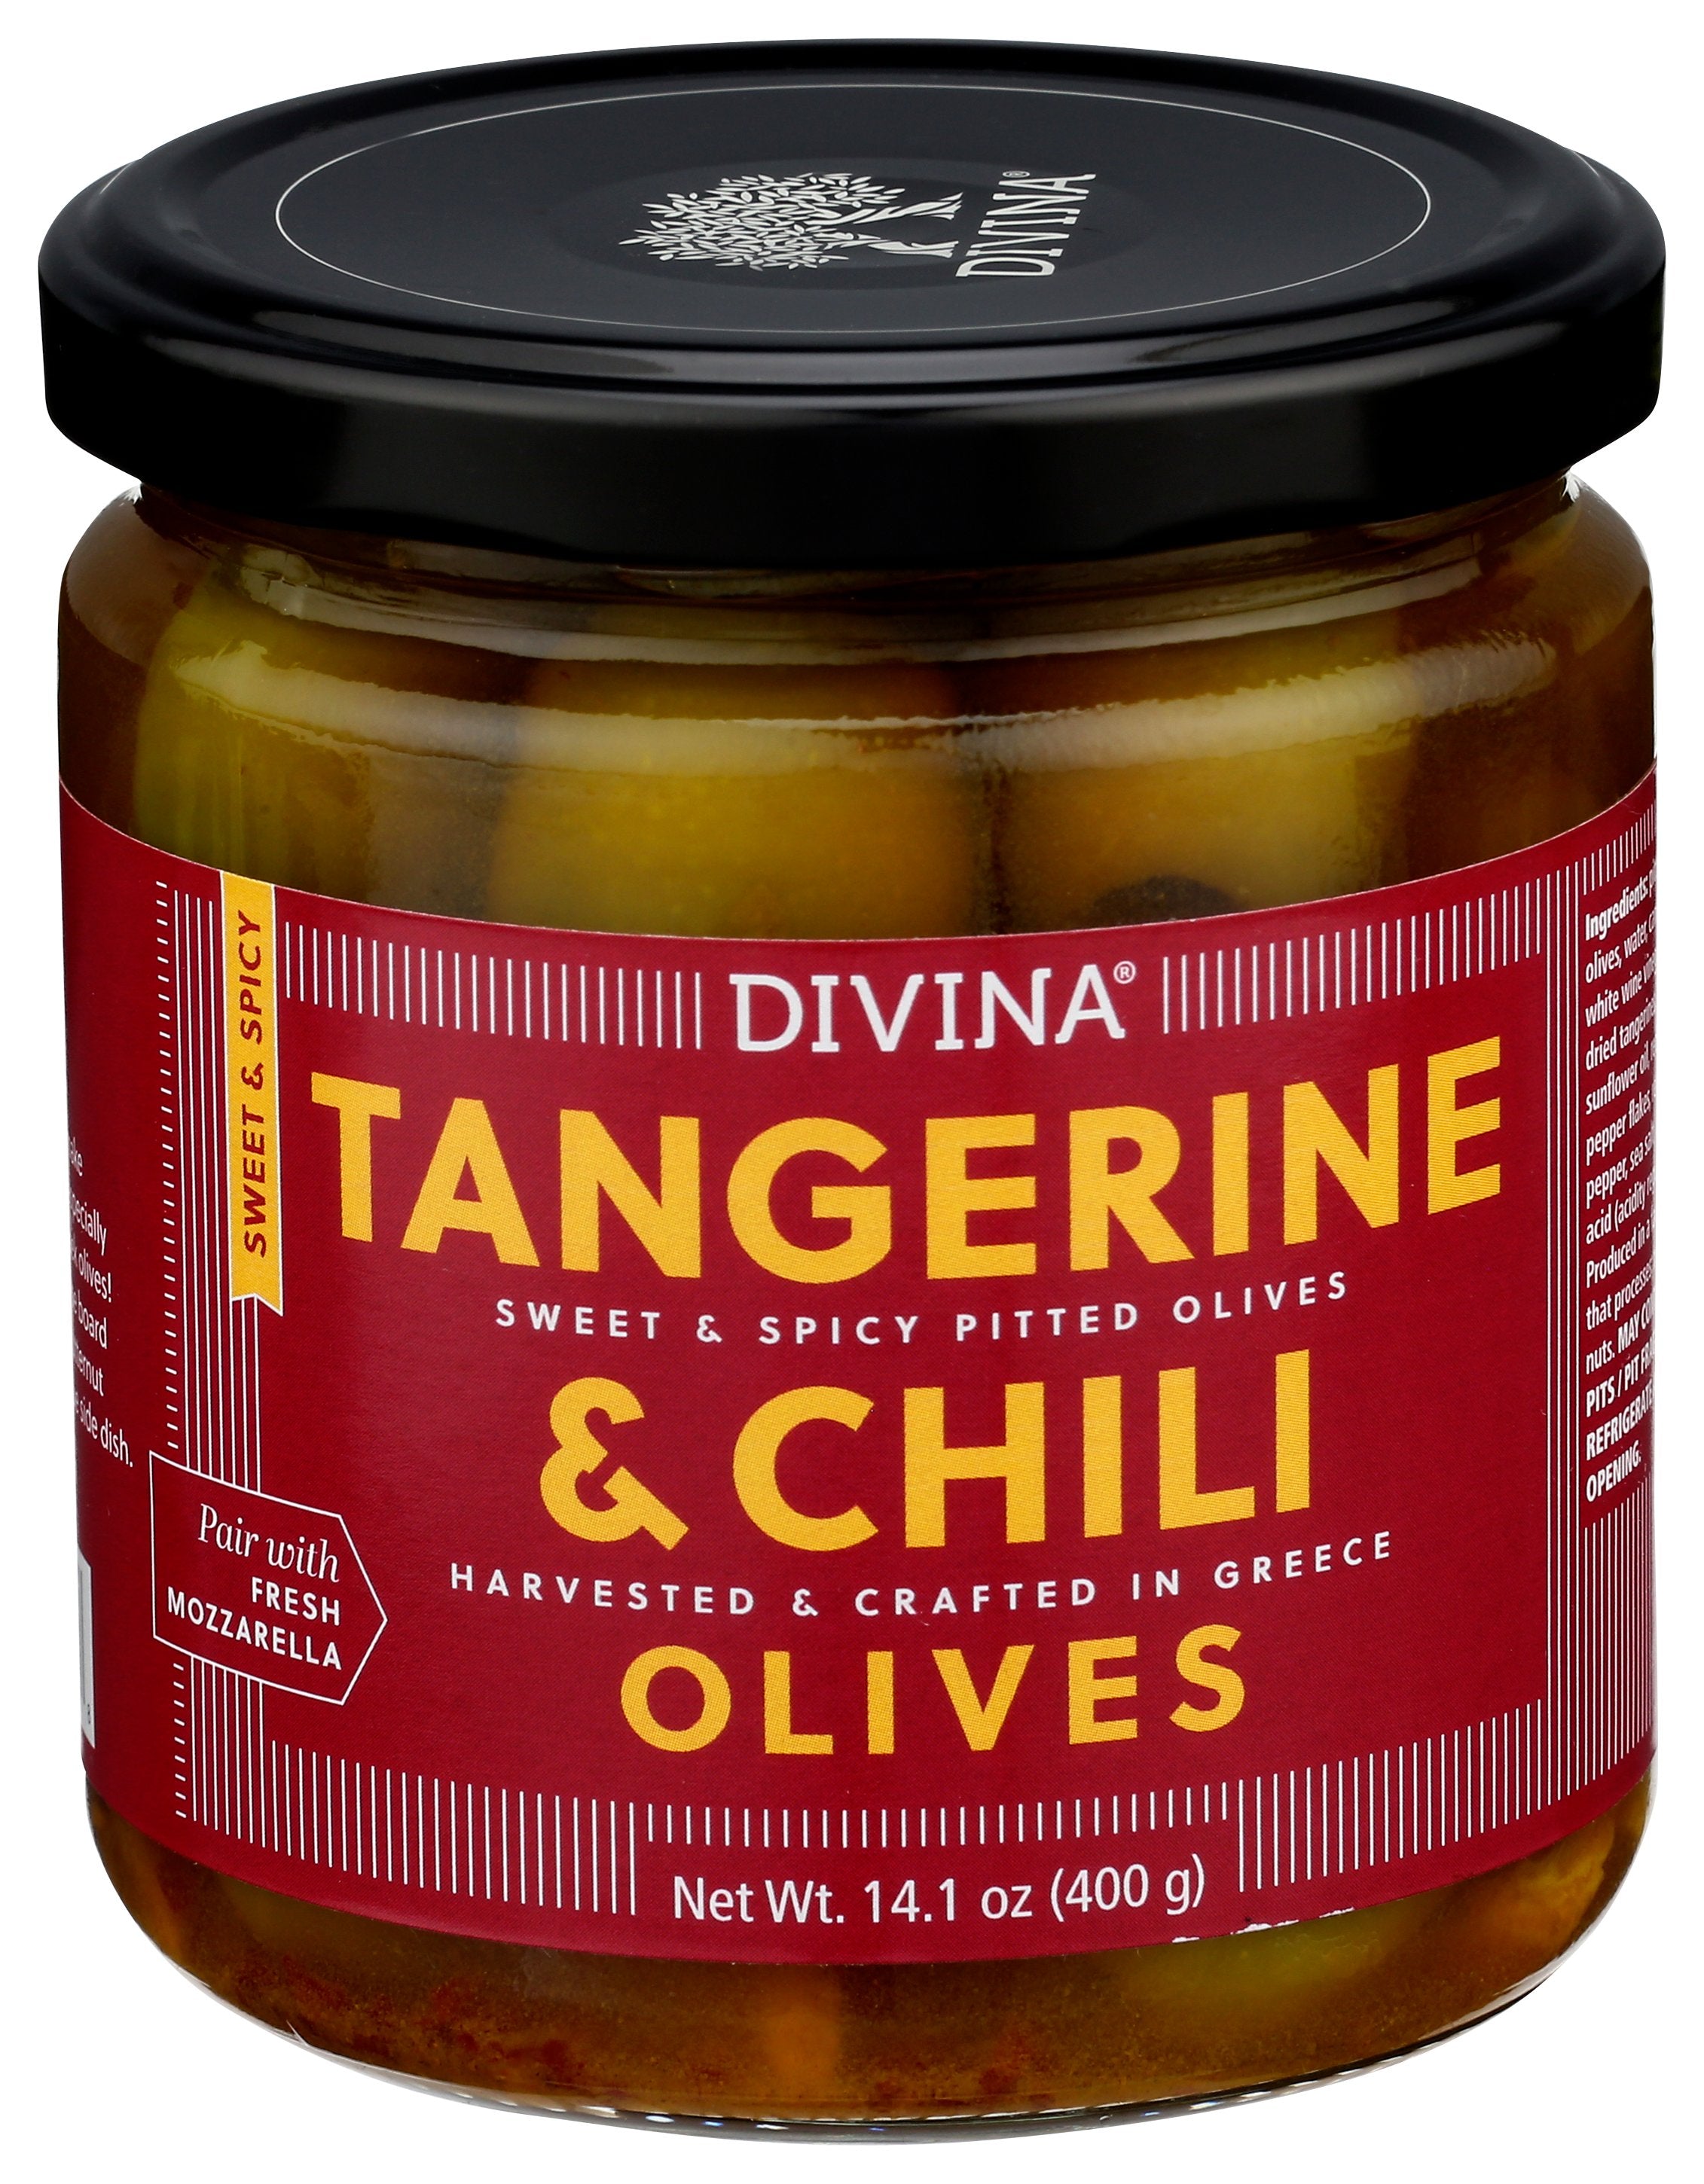 DIVINA OLIVES TANGERINE N CHILI - Case of 6